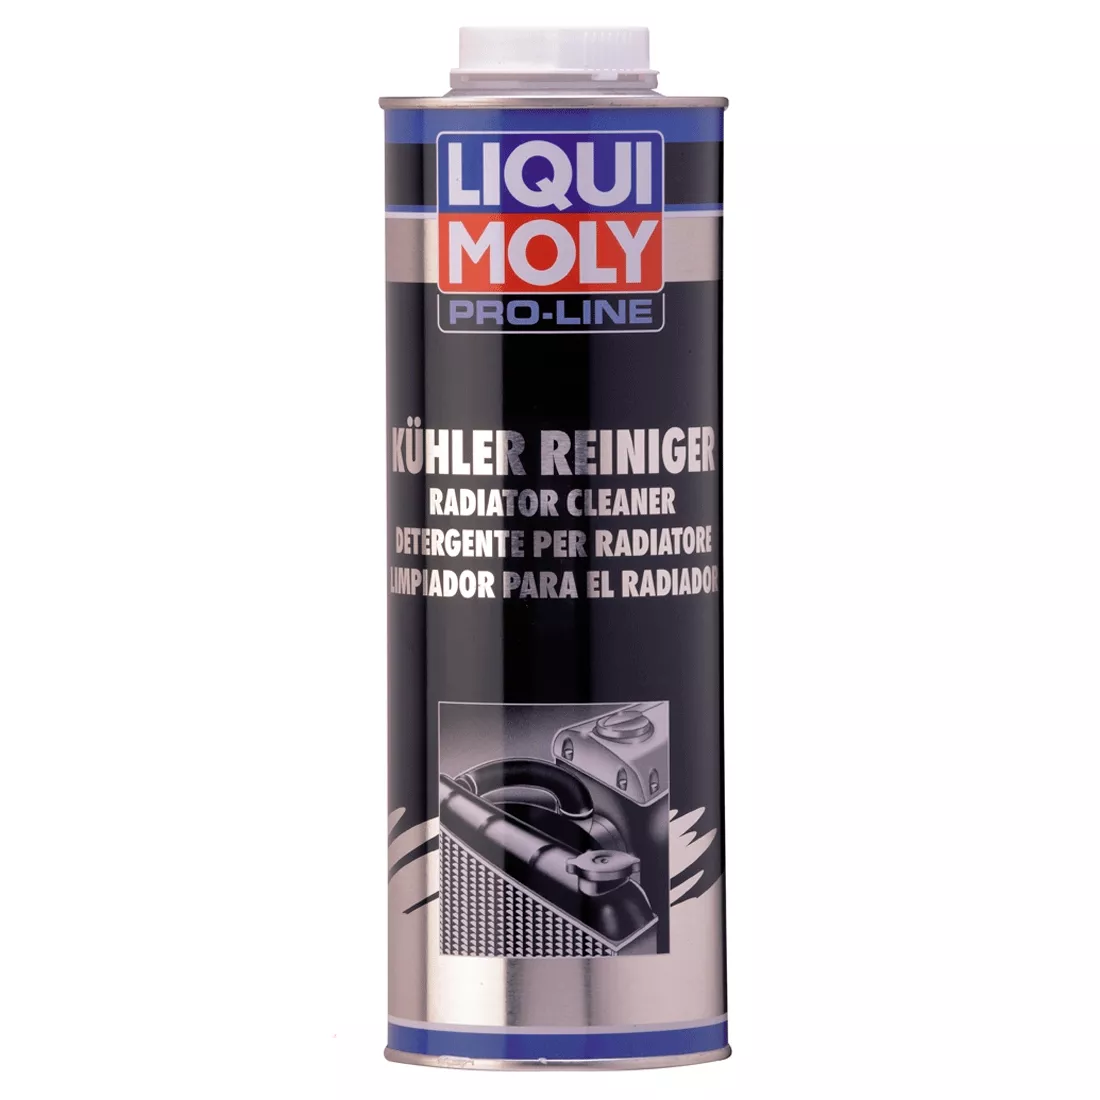 Промывка радиатора Liqui Moly Moly Pro-Line Kuhlerreiniger 1л (5189)